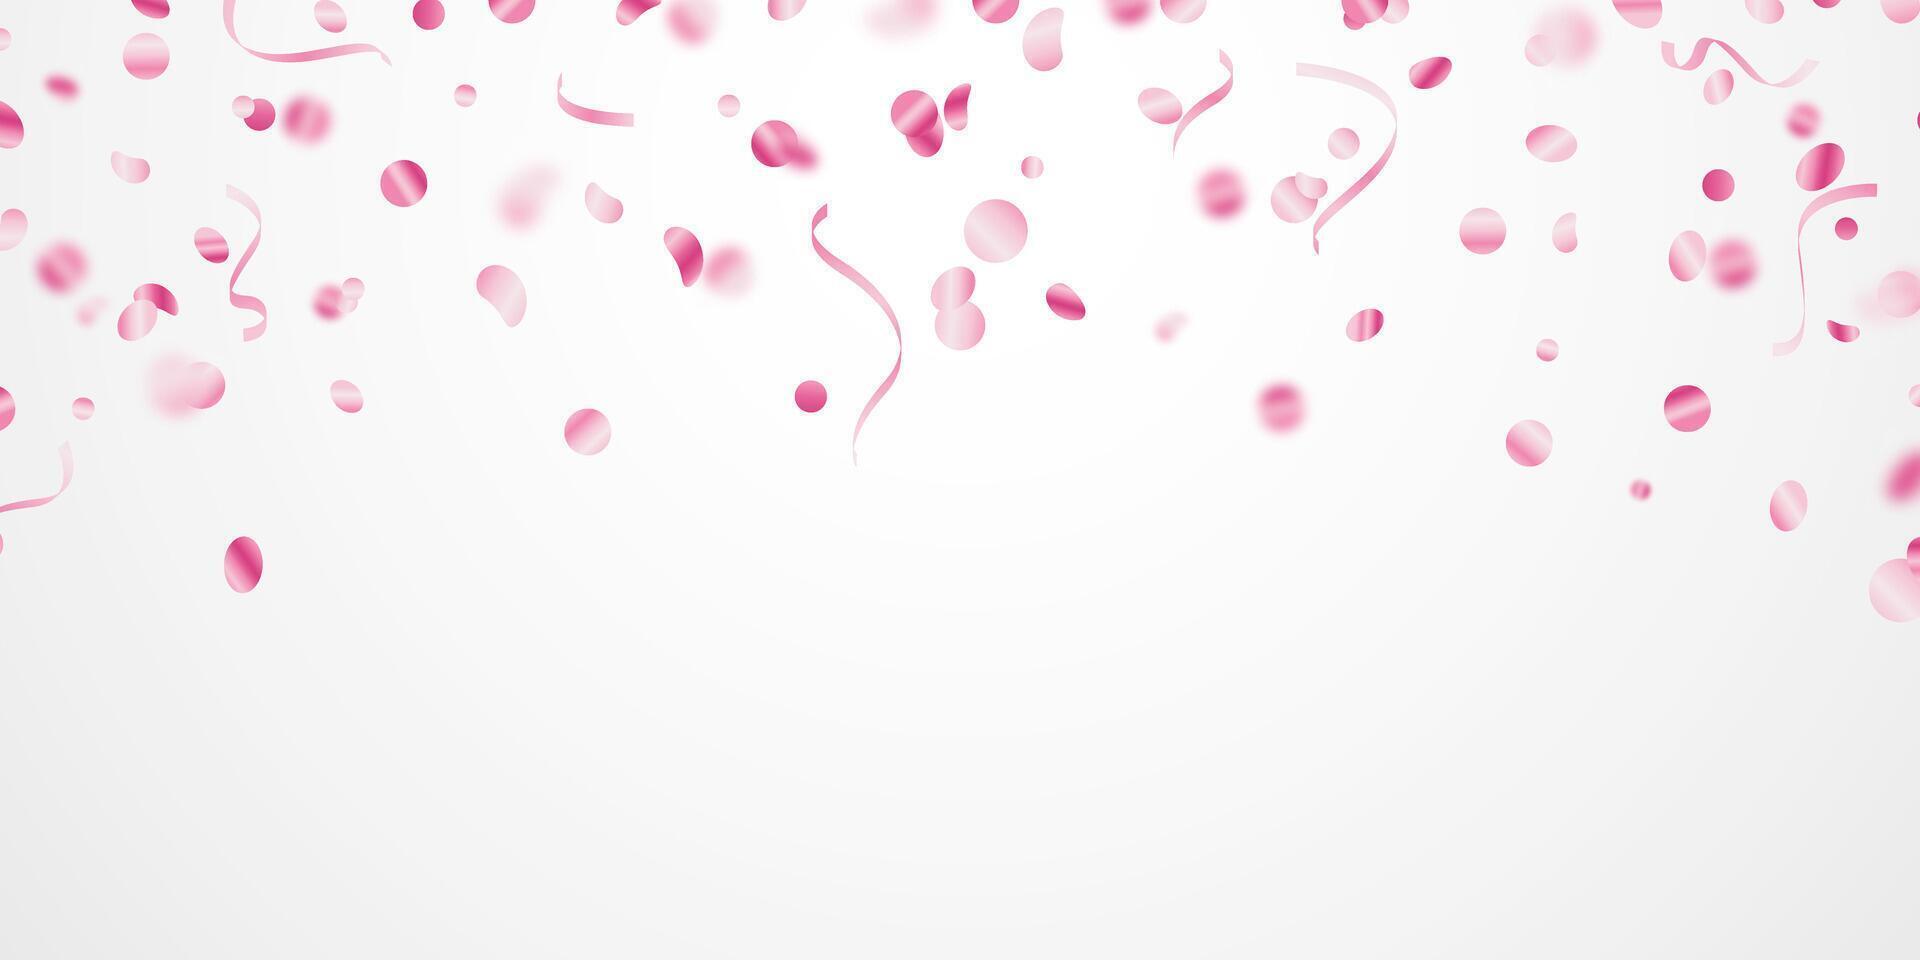 confetti achtergrond mooi roze kleur voor viering partij vector illustratie